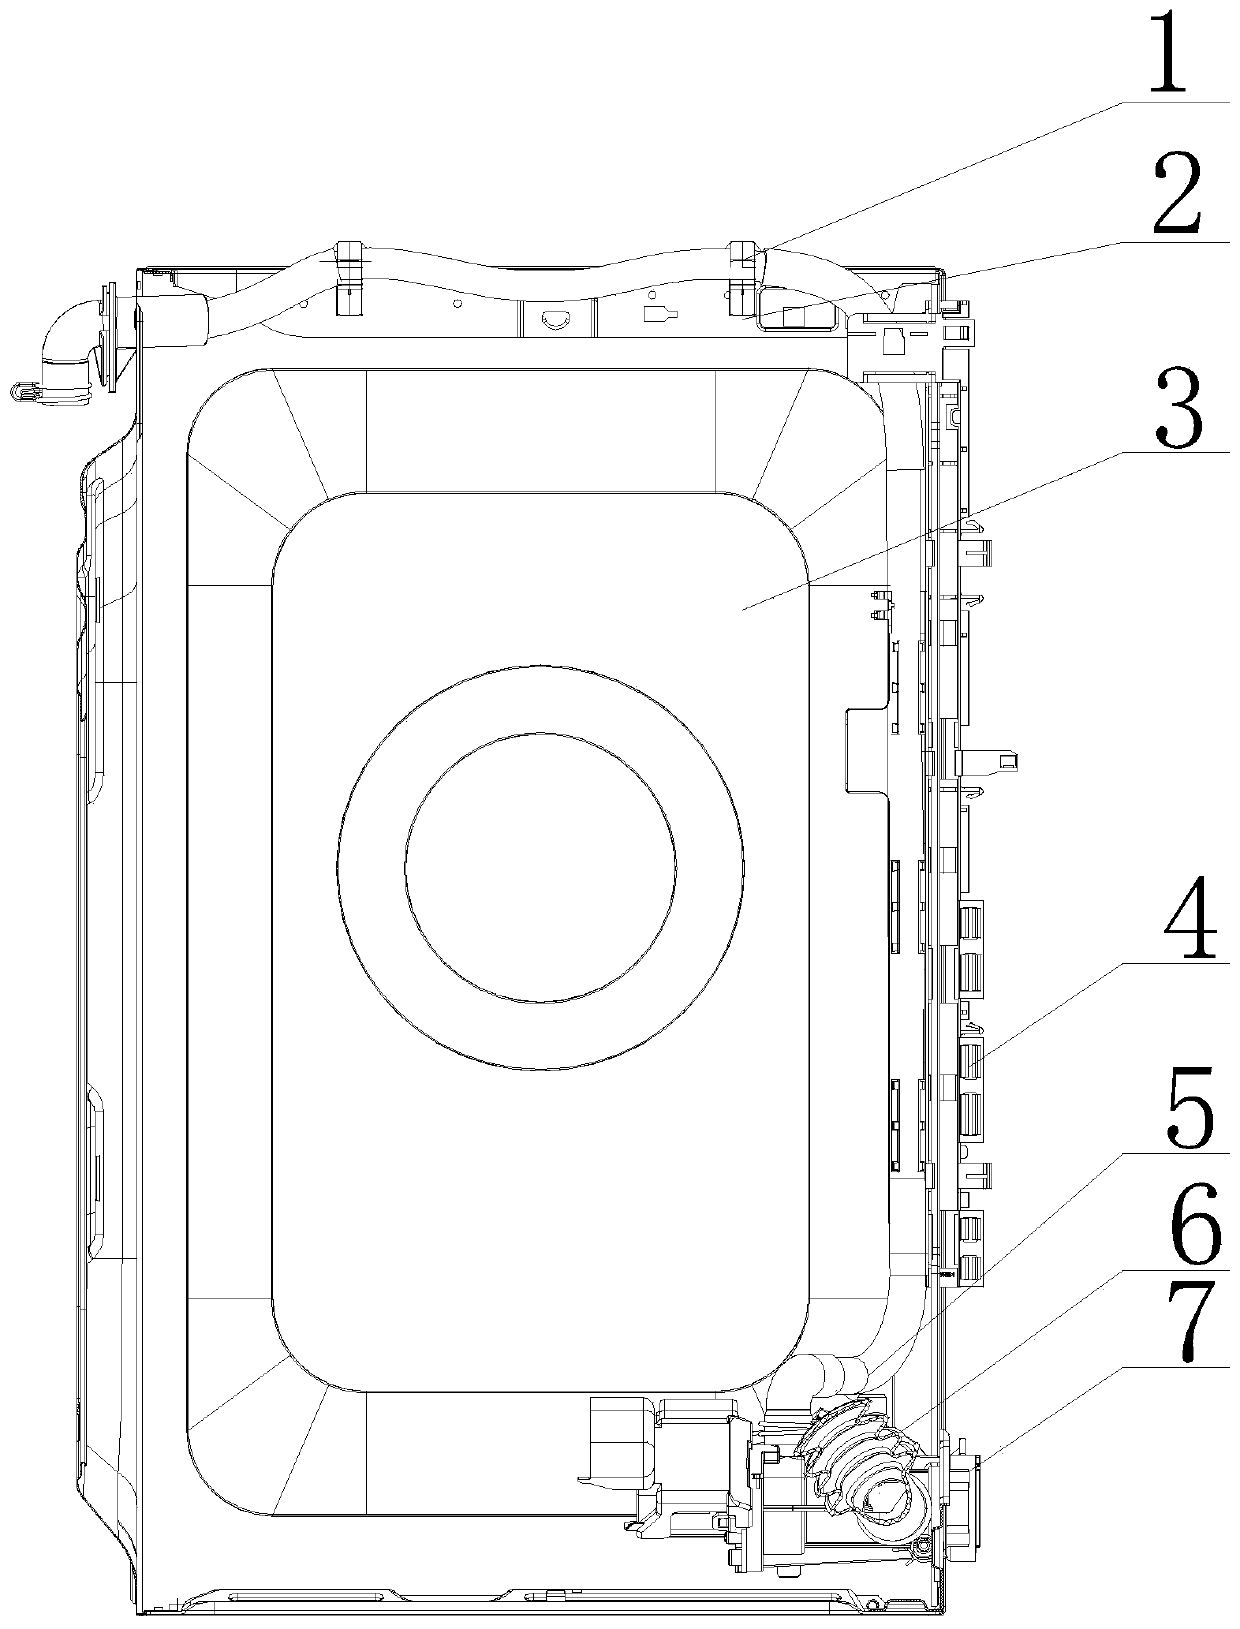 Drainage device of washing machine